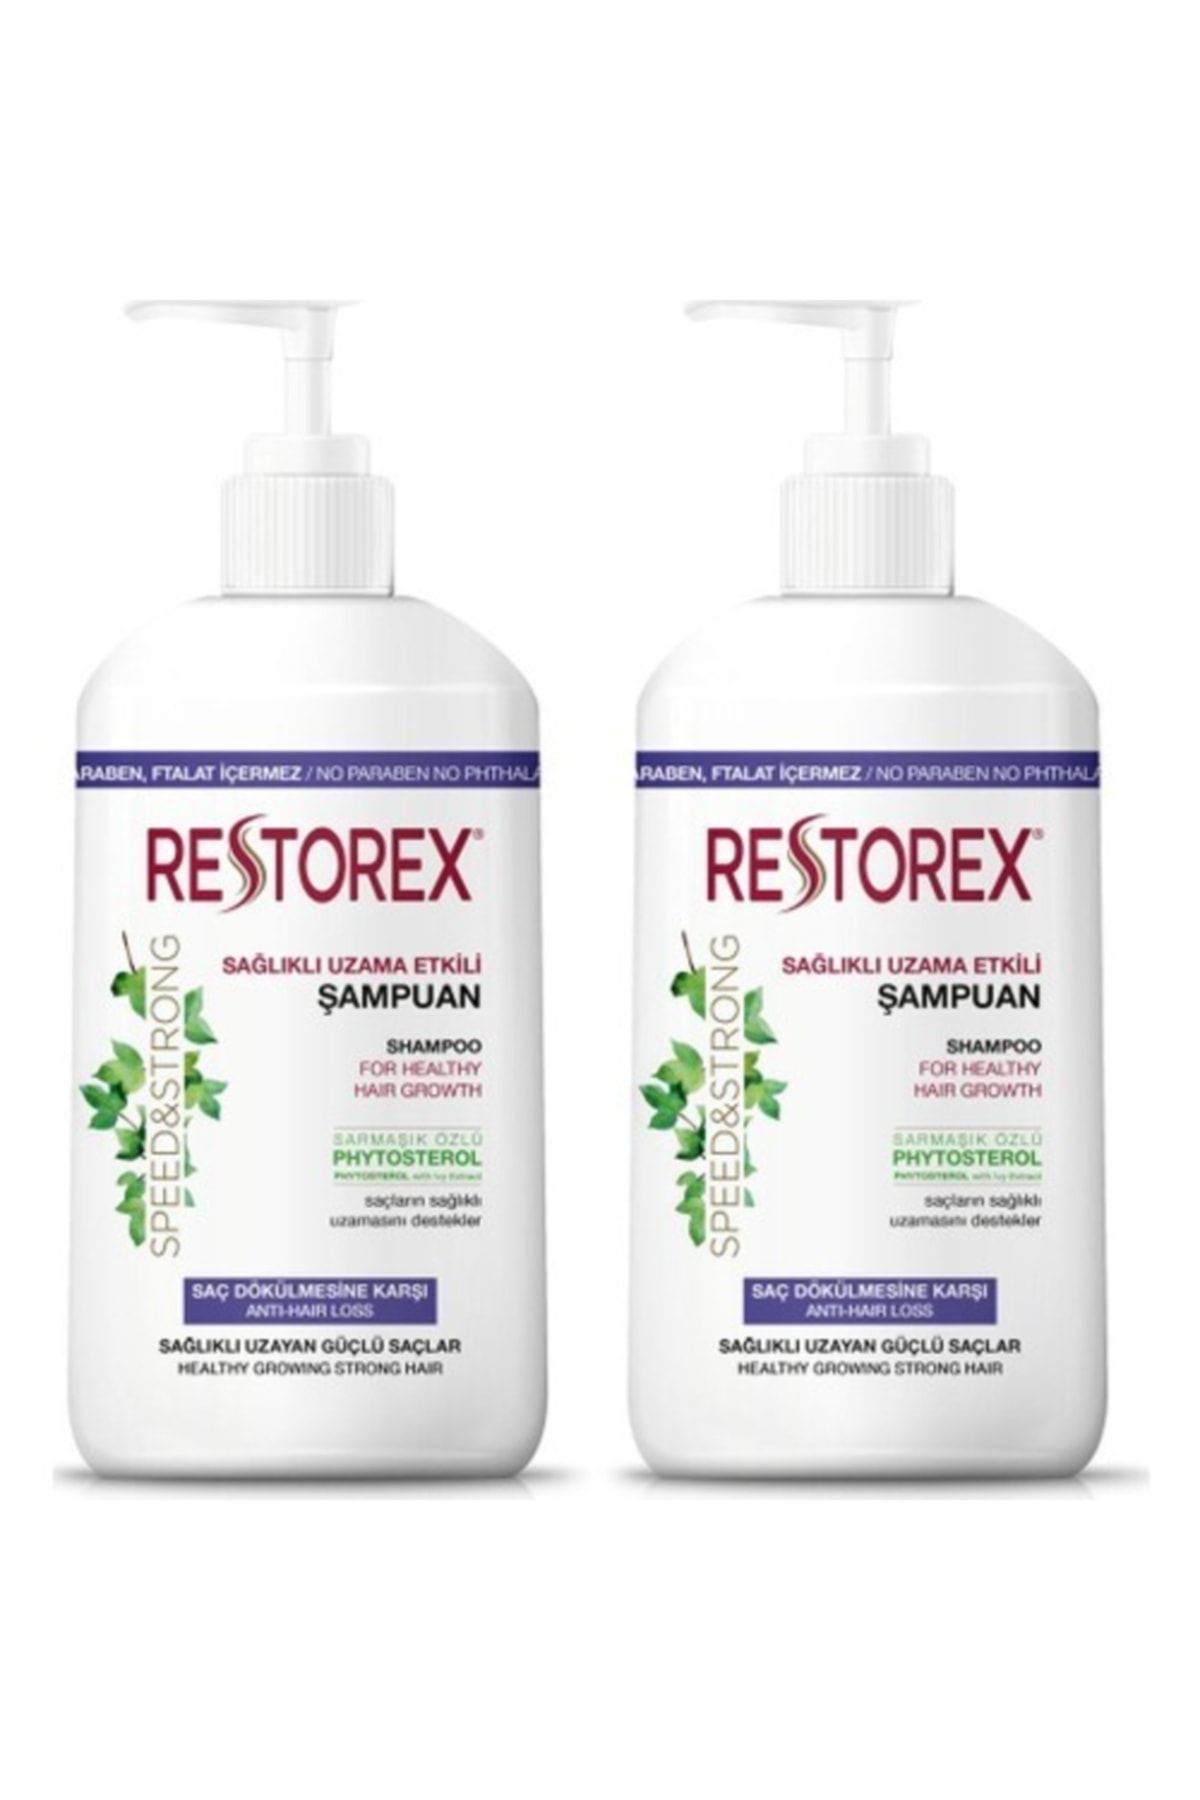 Restorex Şampuan Saç Dökülmesine Karşı Ekstra Direnç 1000 ml 2 Adet